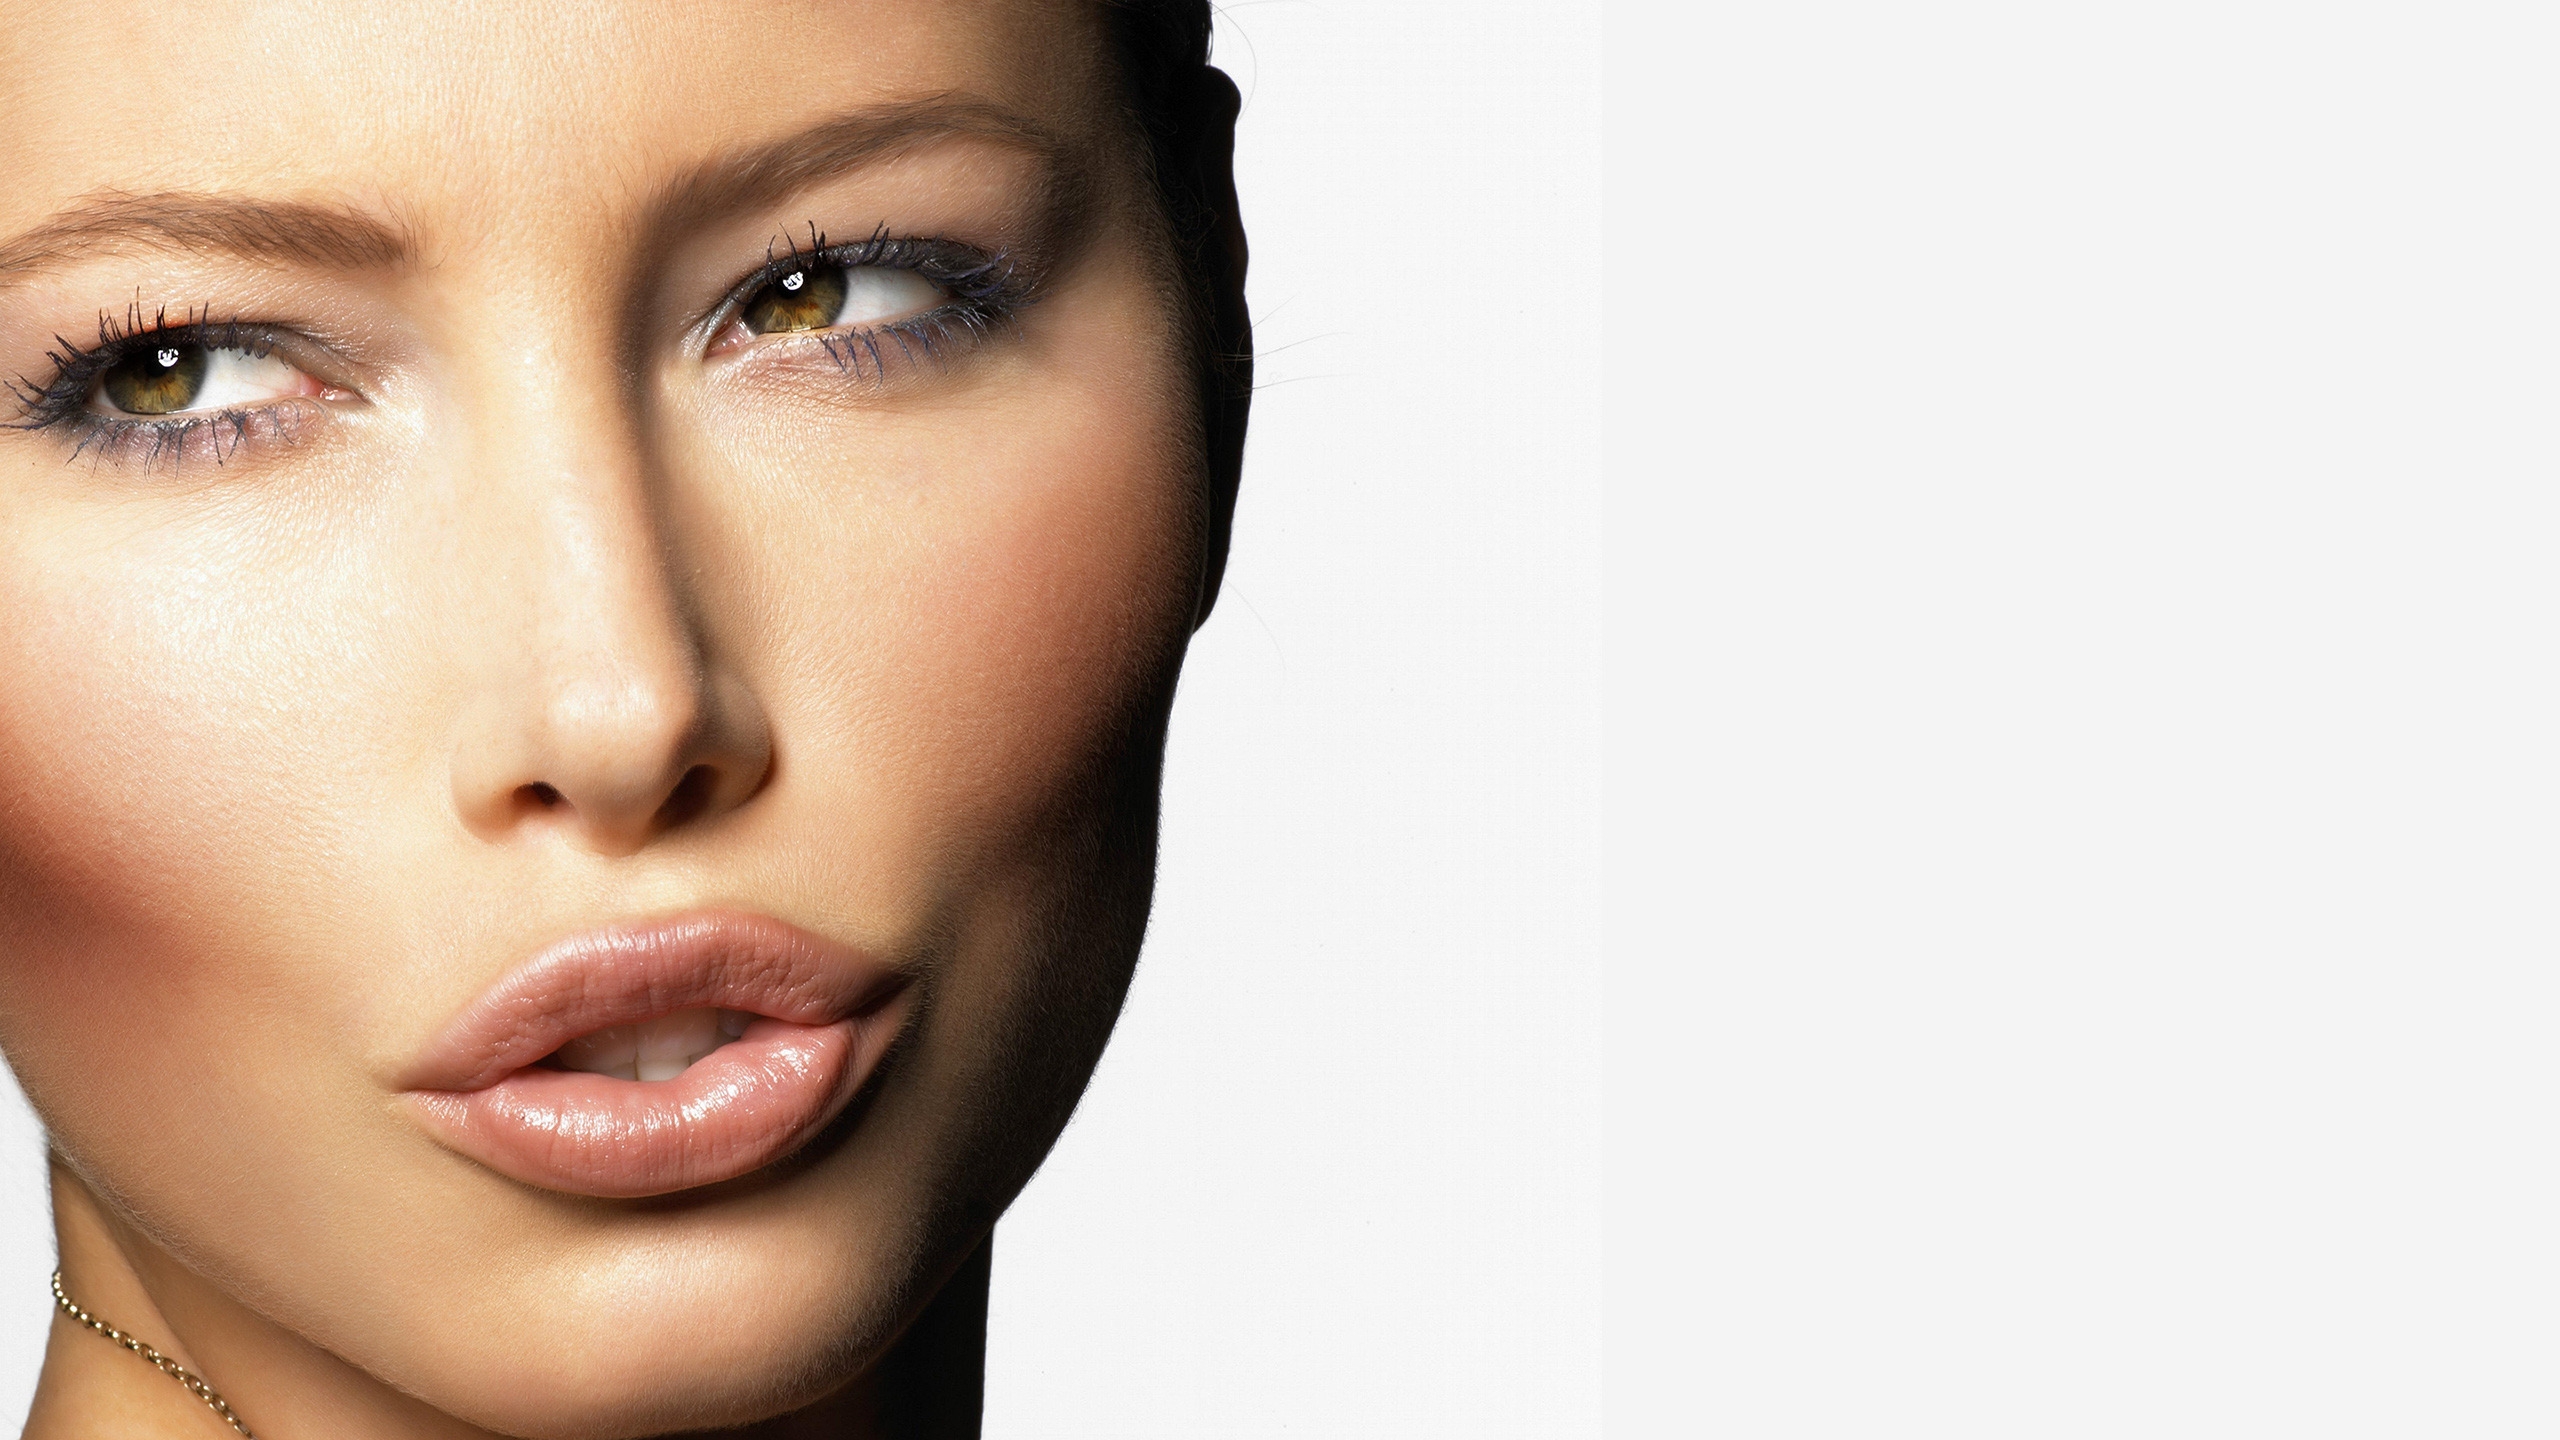 Jessica Biel Perfect Face for 2560x1440 HDTV resolution